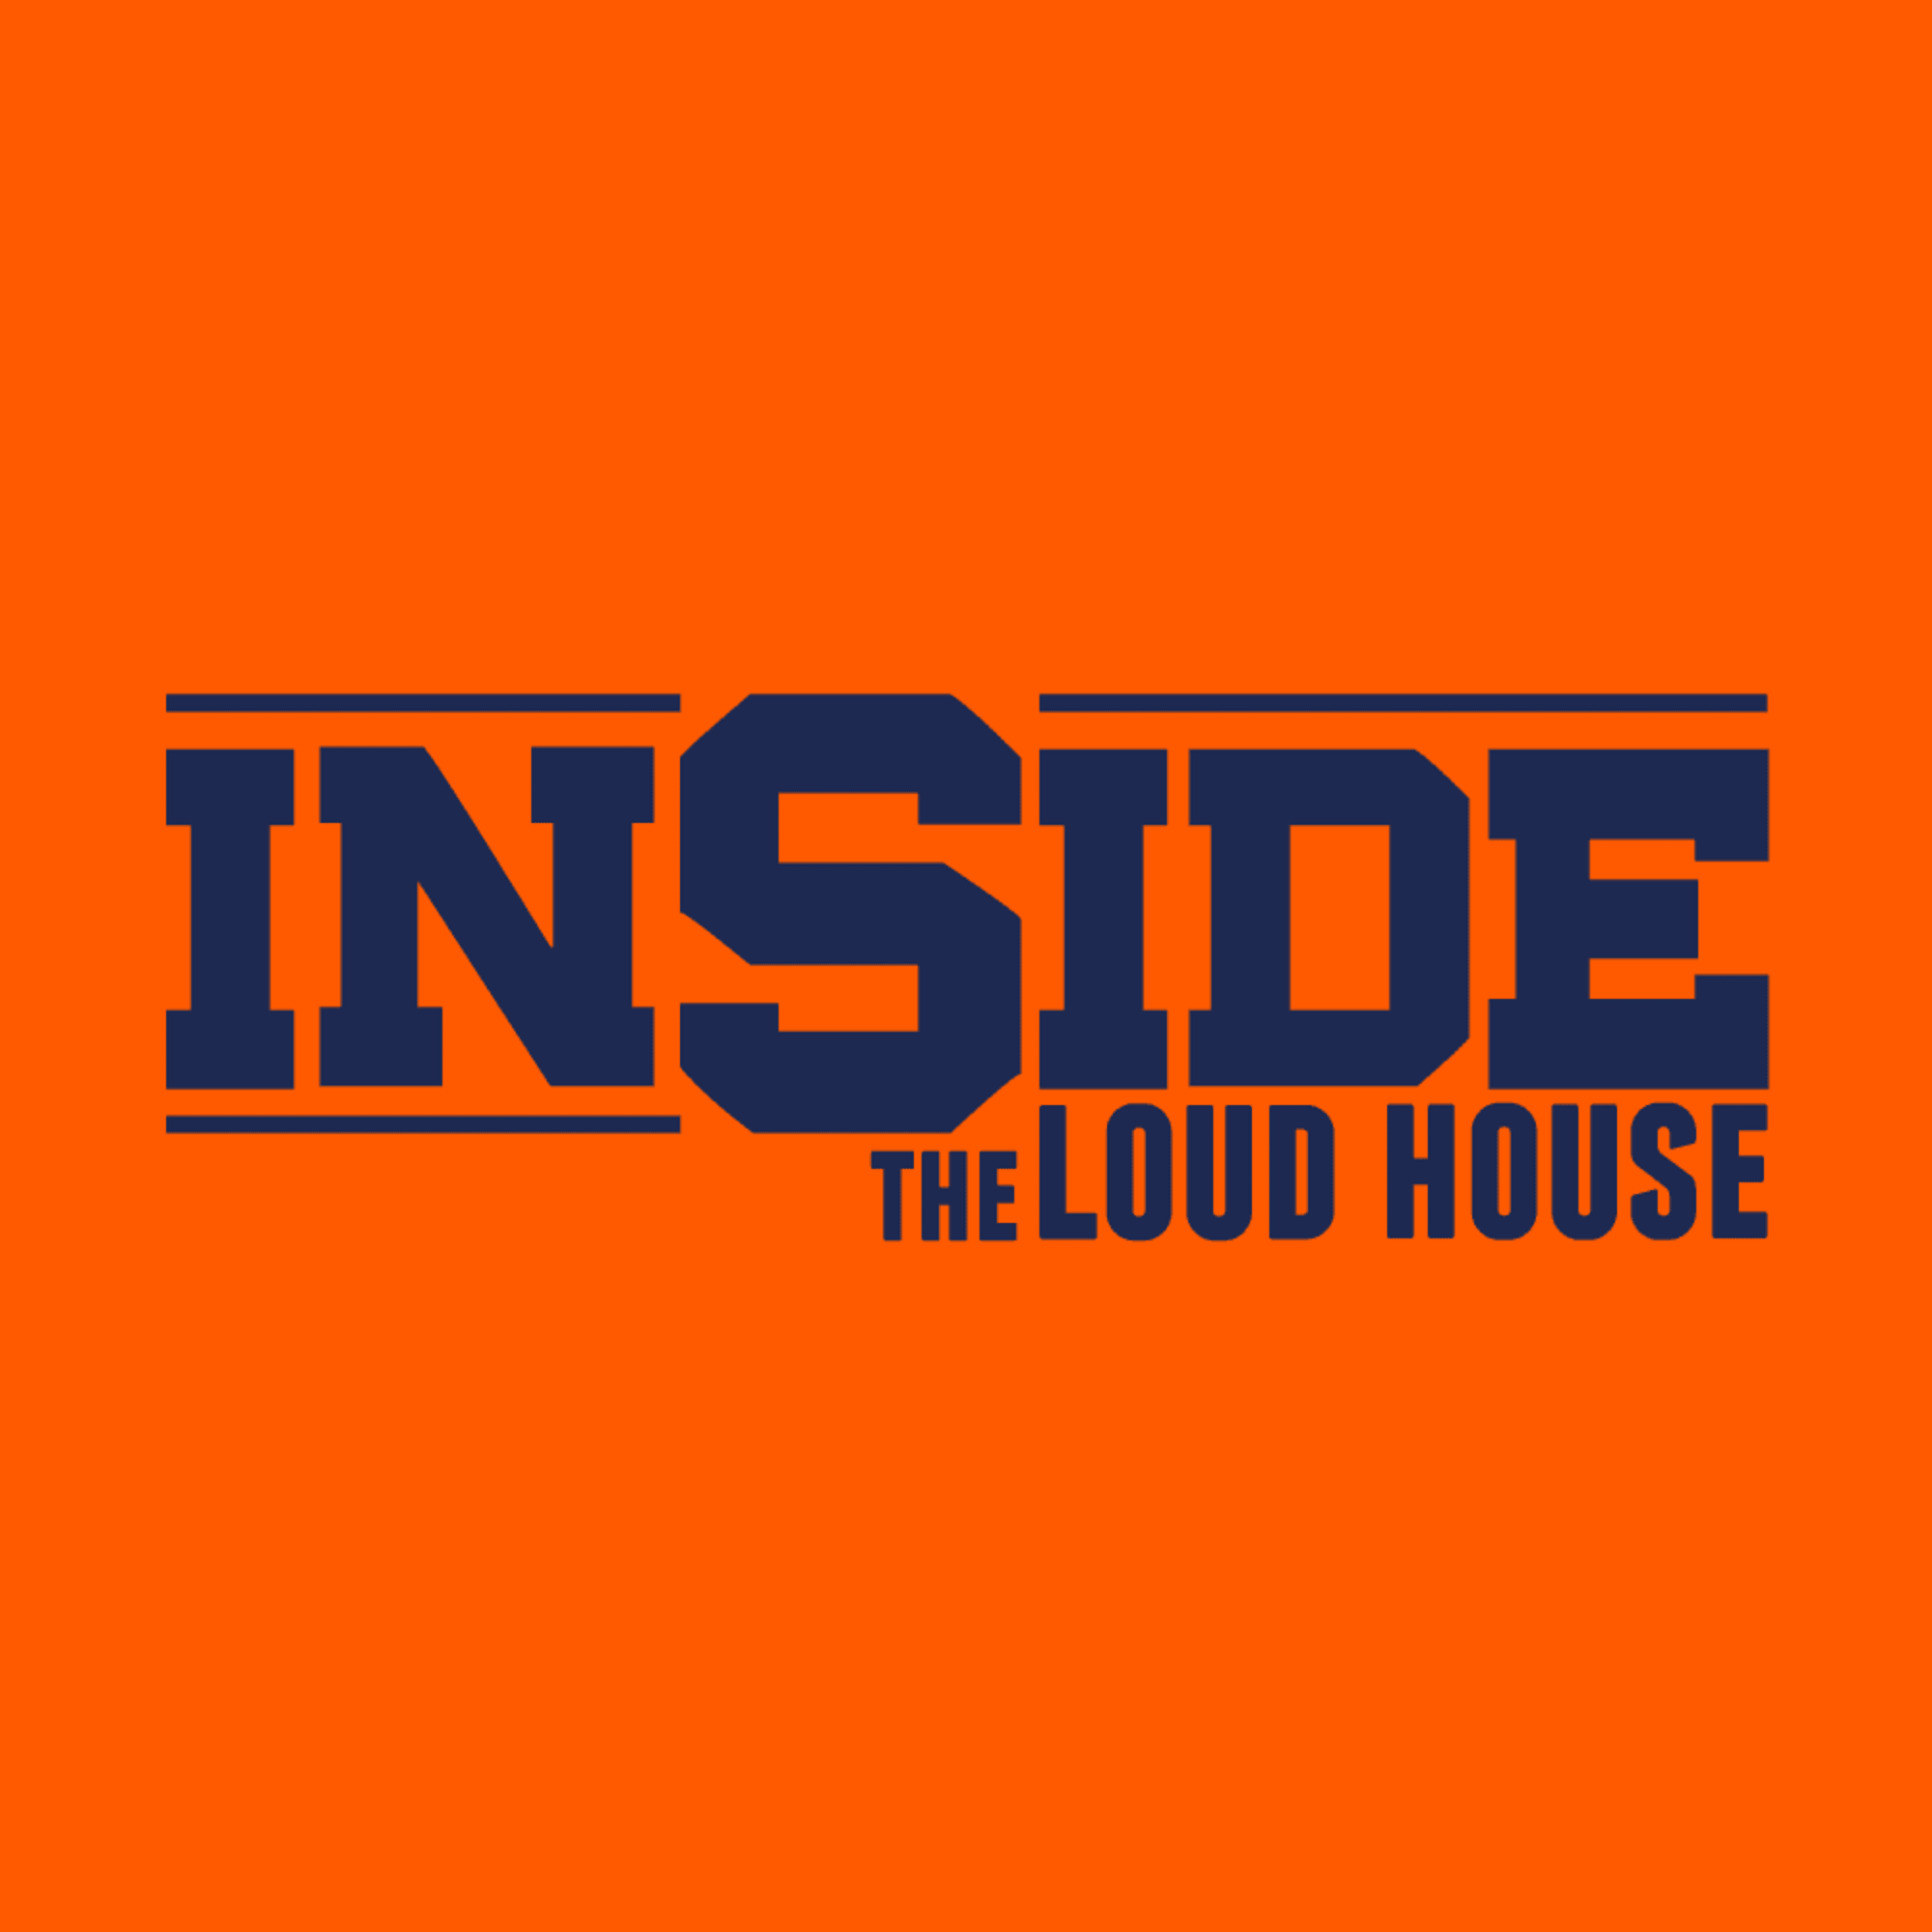 (c) Insidetheloudhouse.com